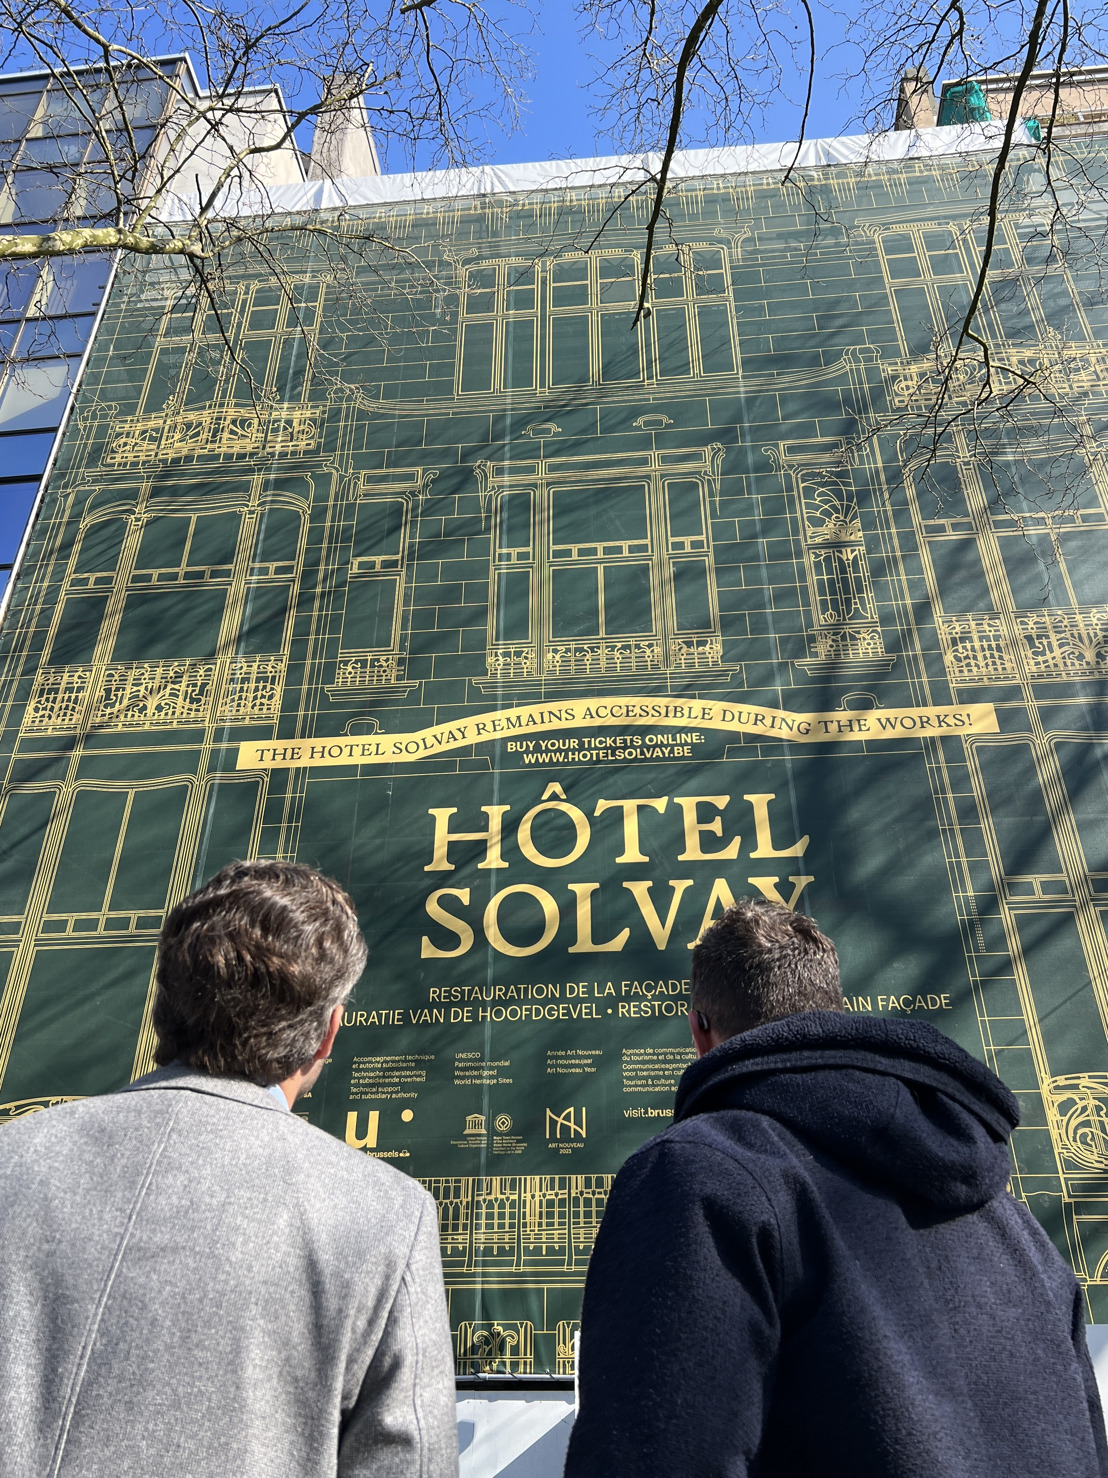 Solvay House facade renovation works begin